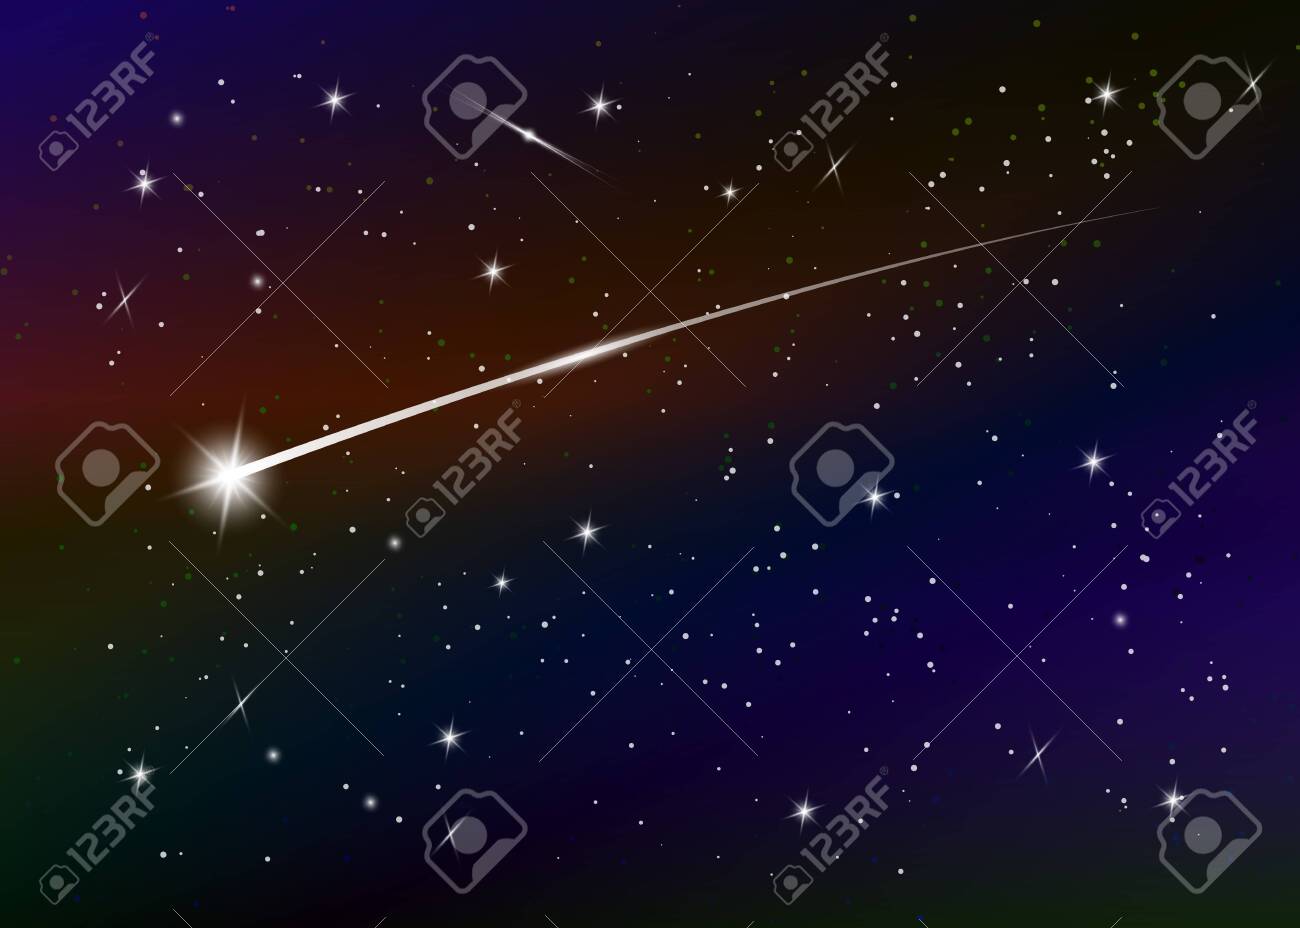 Shooting Star Background Against Dark Blue Starry Night Sky